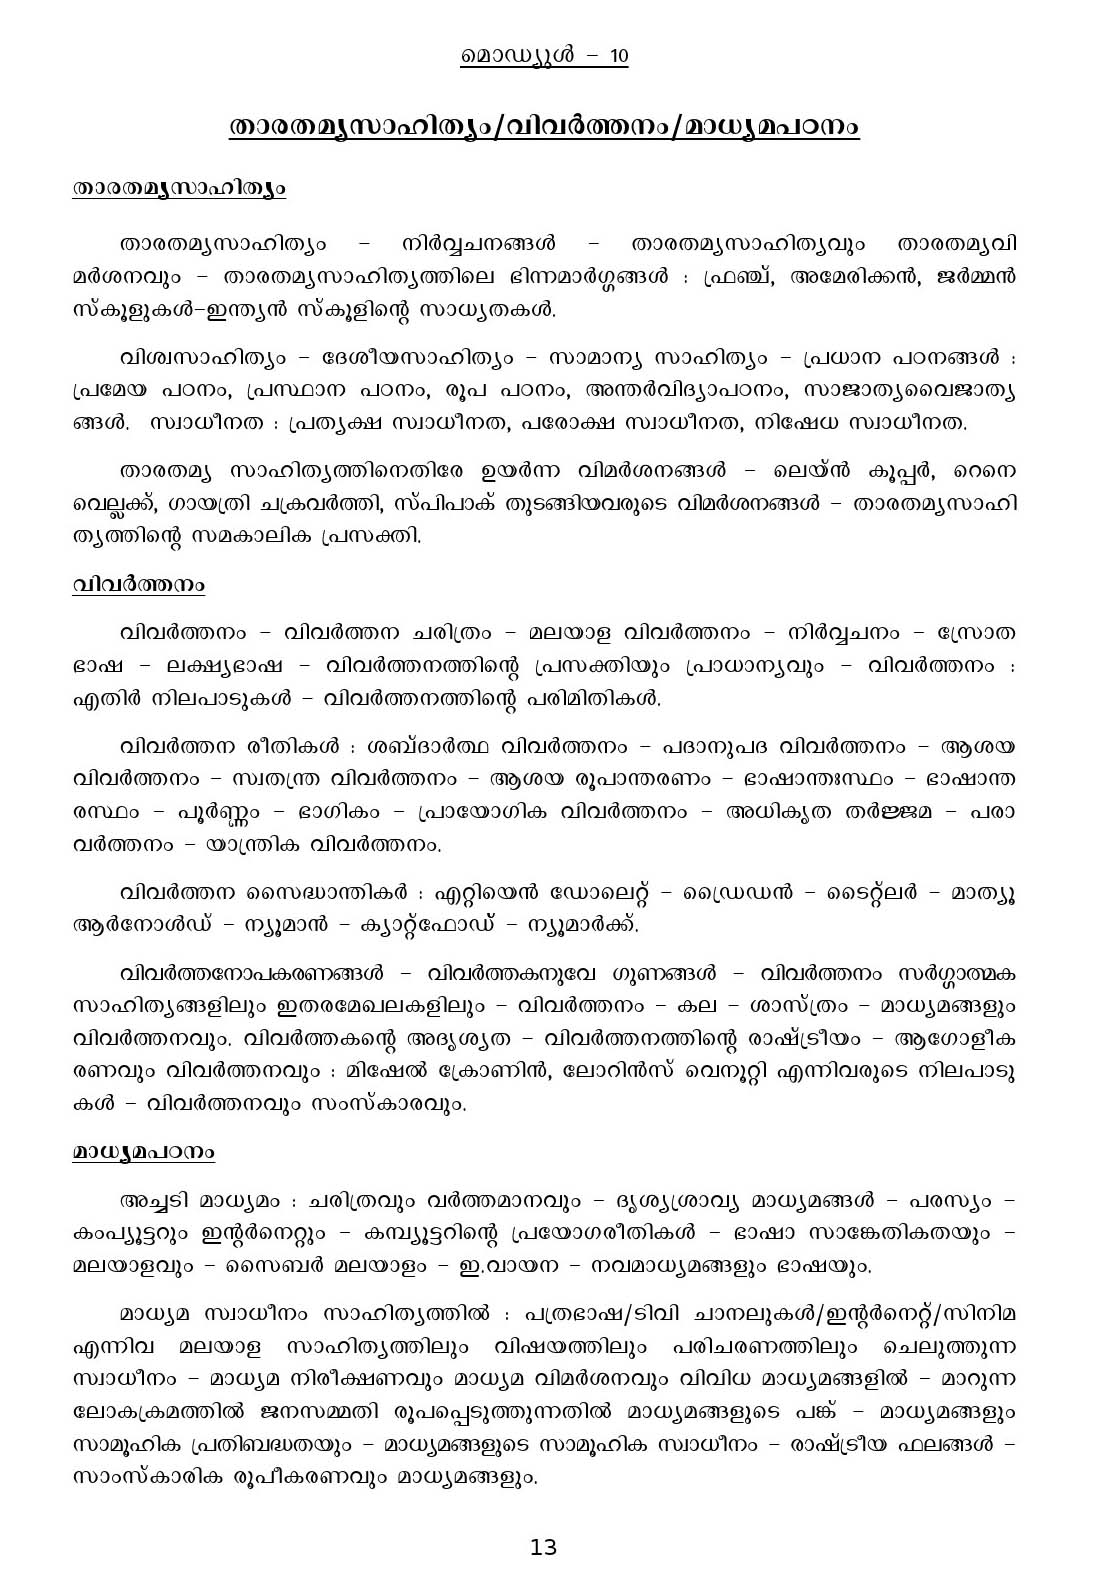 Kerala PSC Assistant Professor Malayalam Exam Syllabus - Notification Image 13